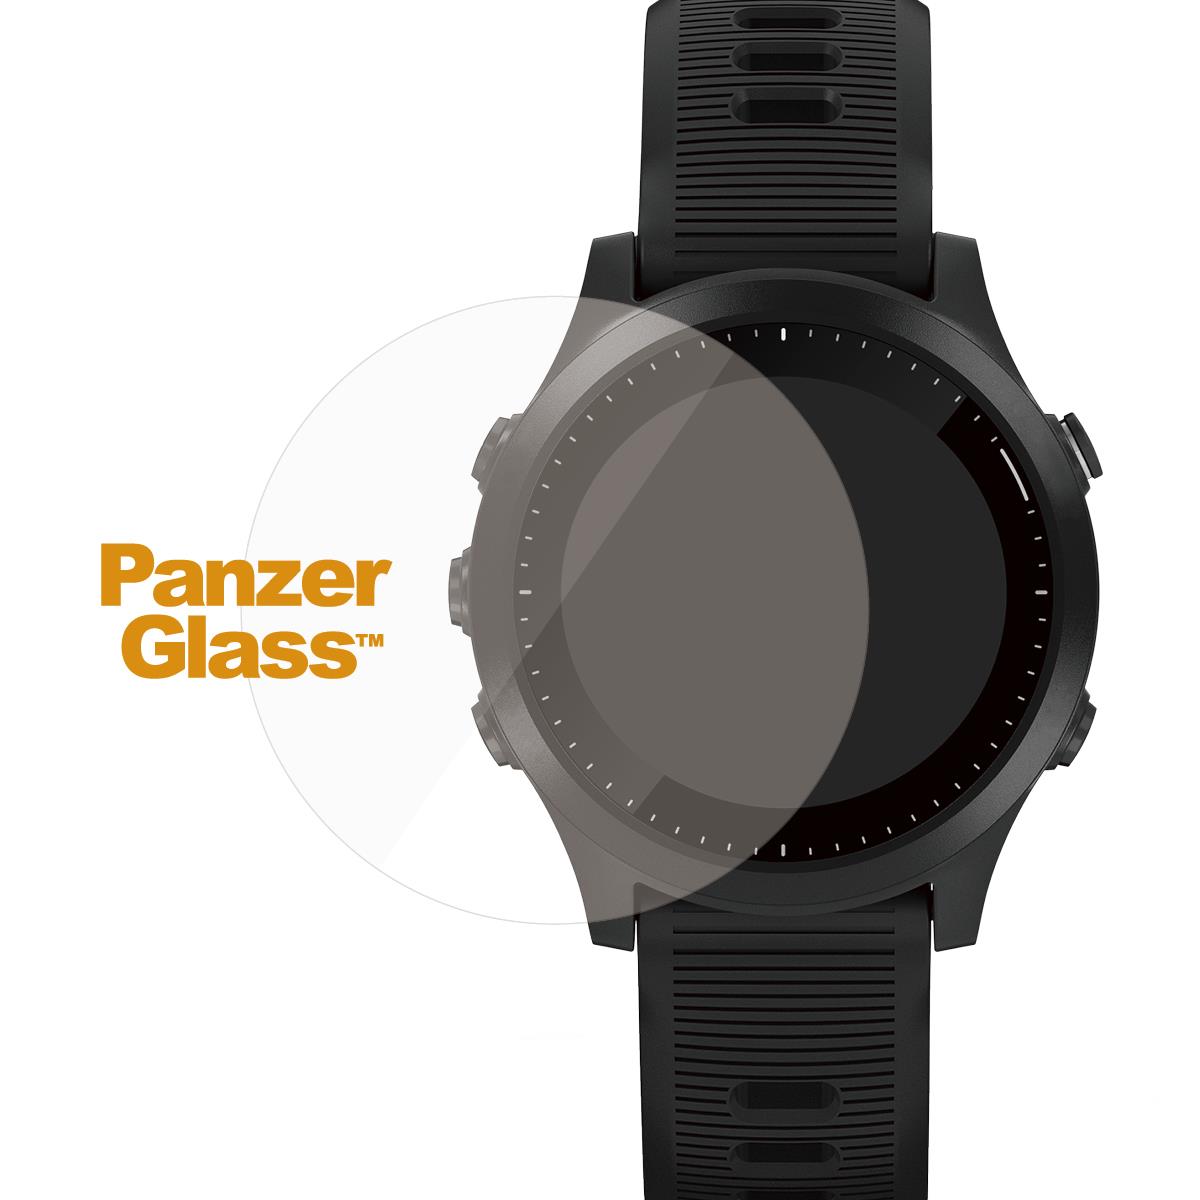 PanzerGlass Screen protector for SmartWatch, 30 mm